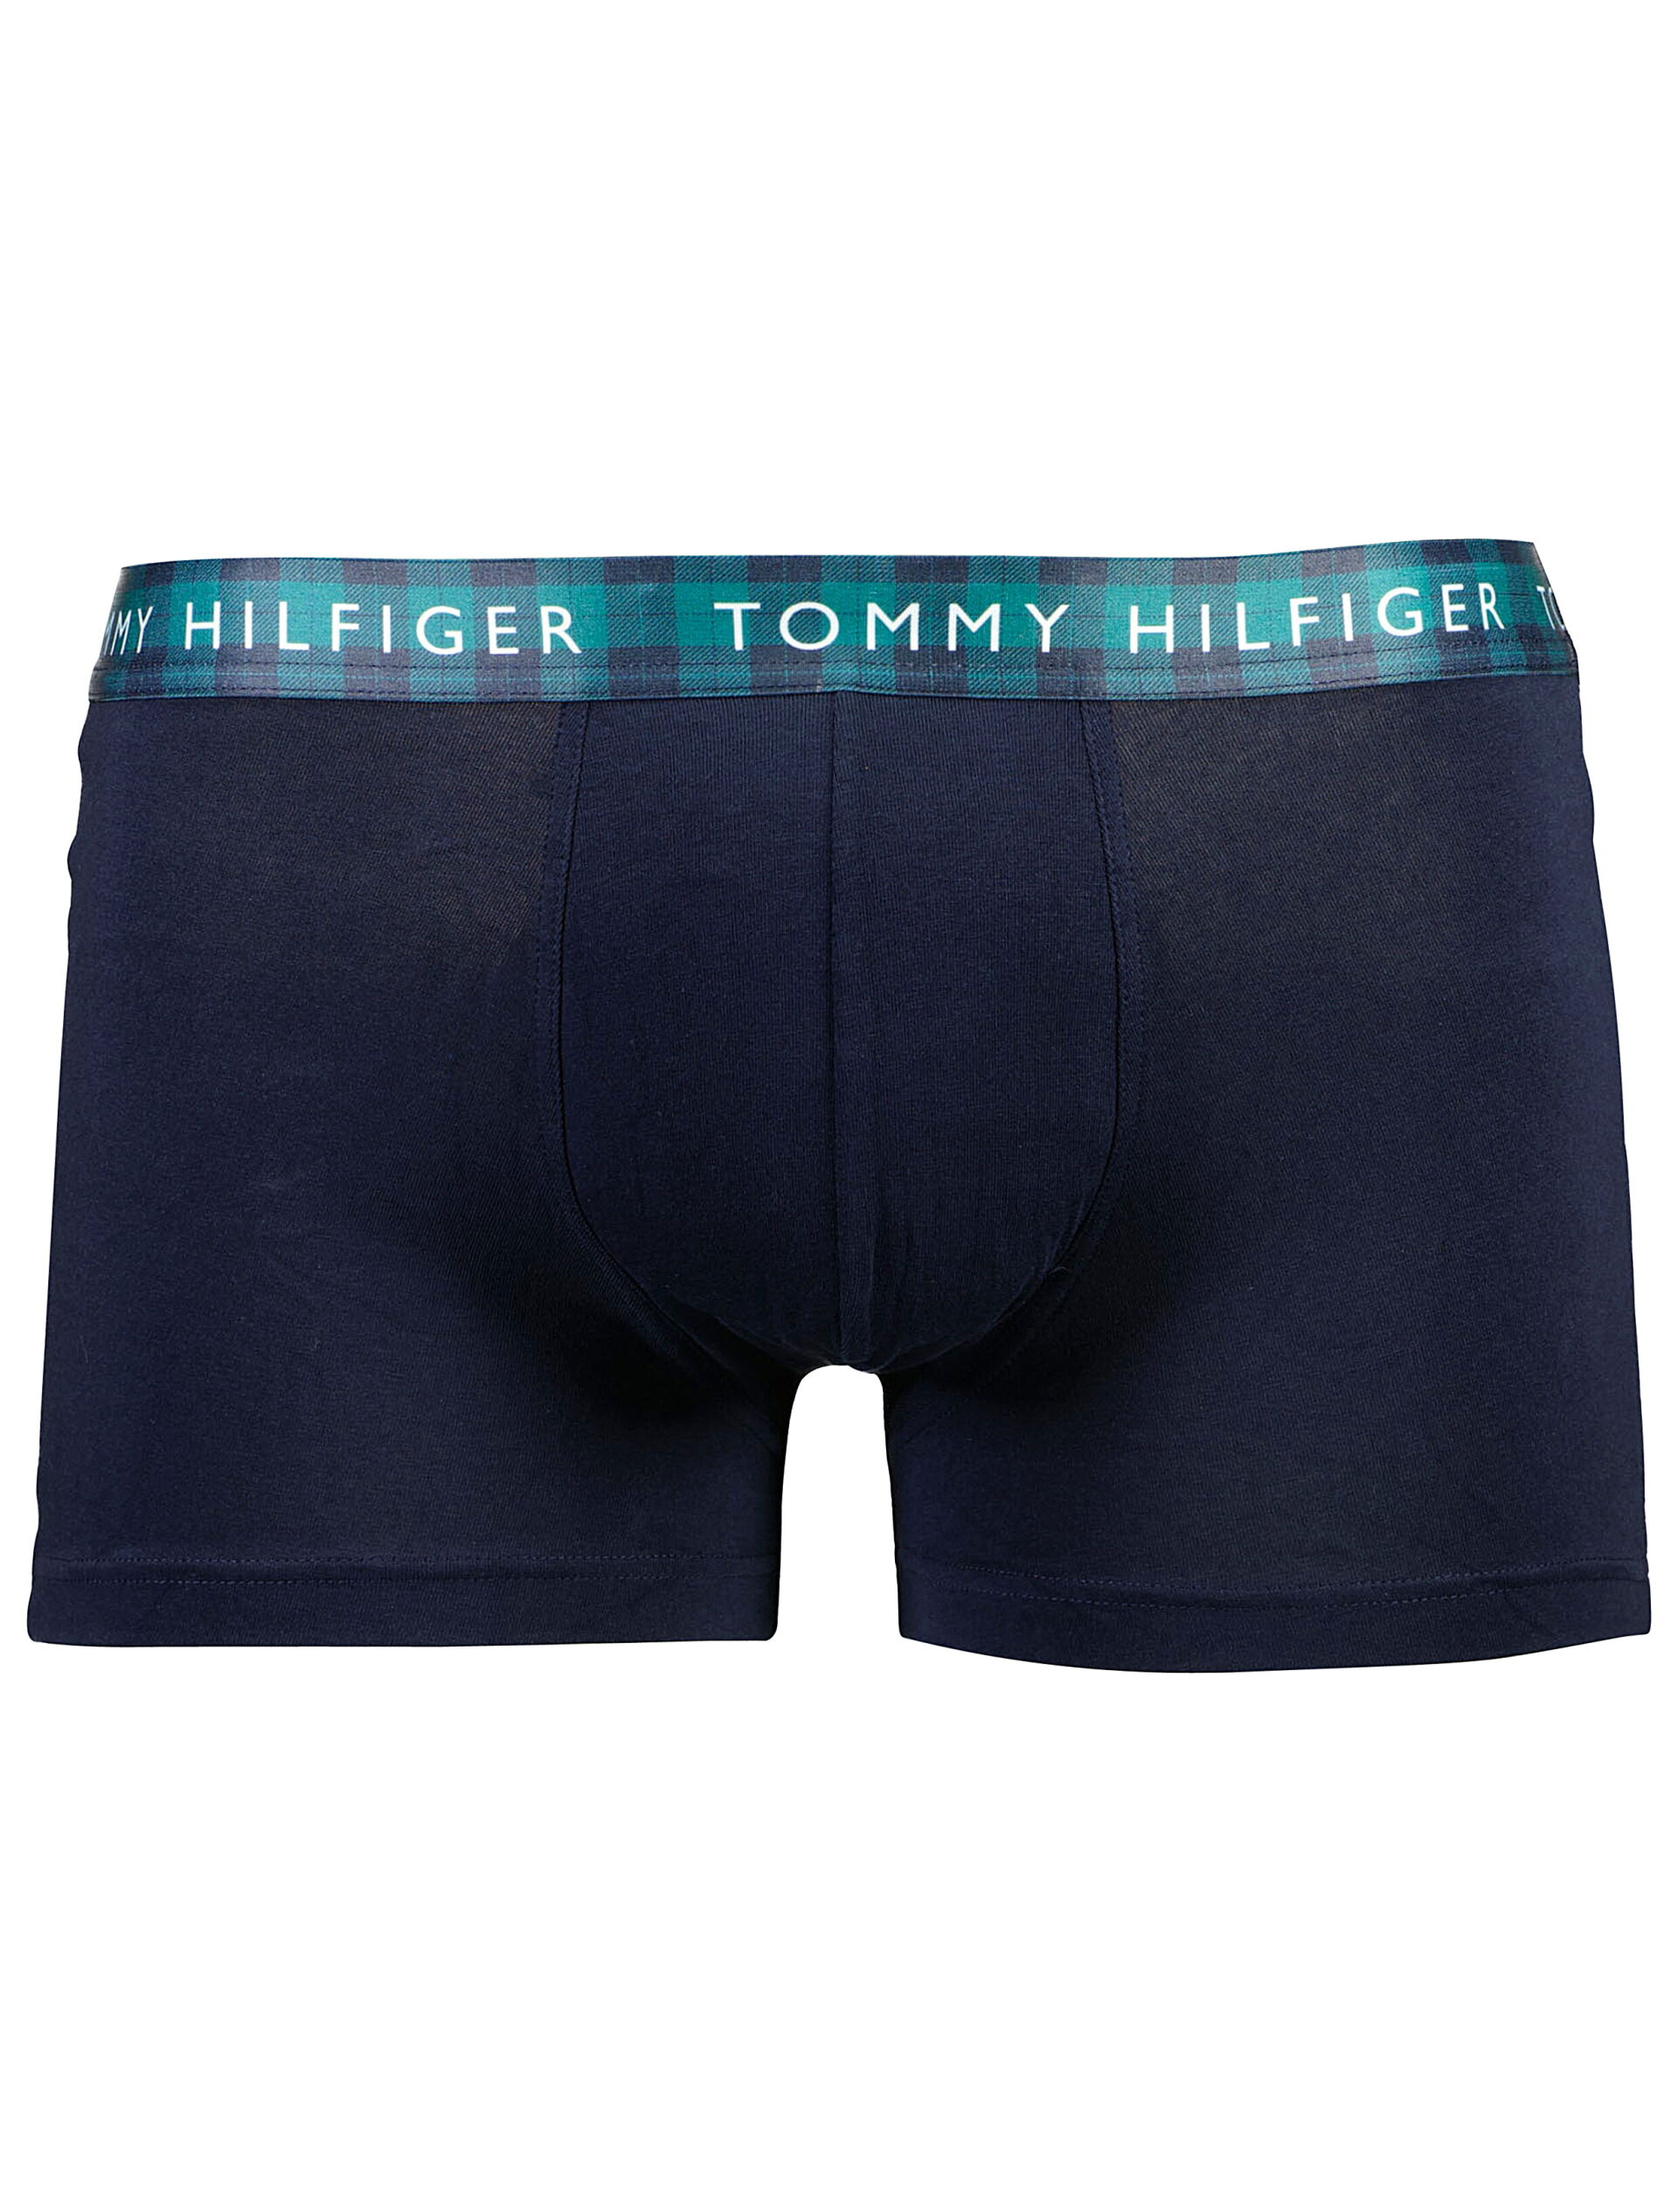 Tommy Hilfiger  Tights 90-900850